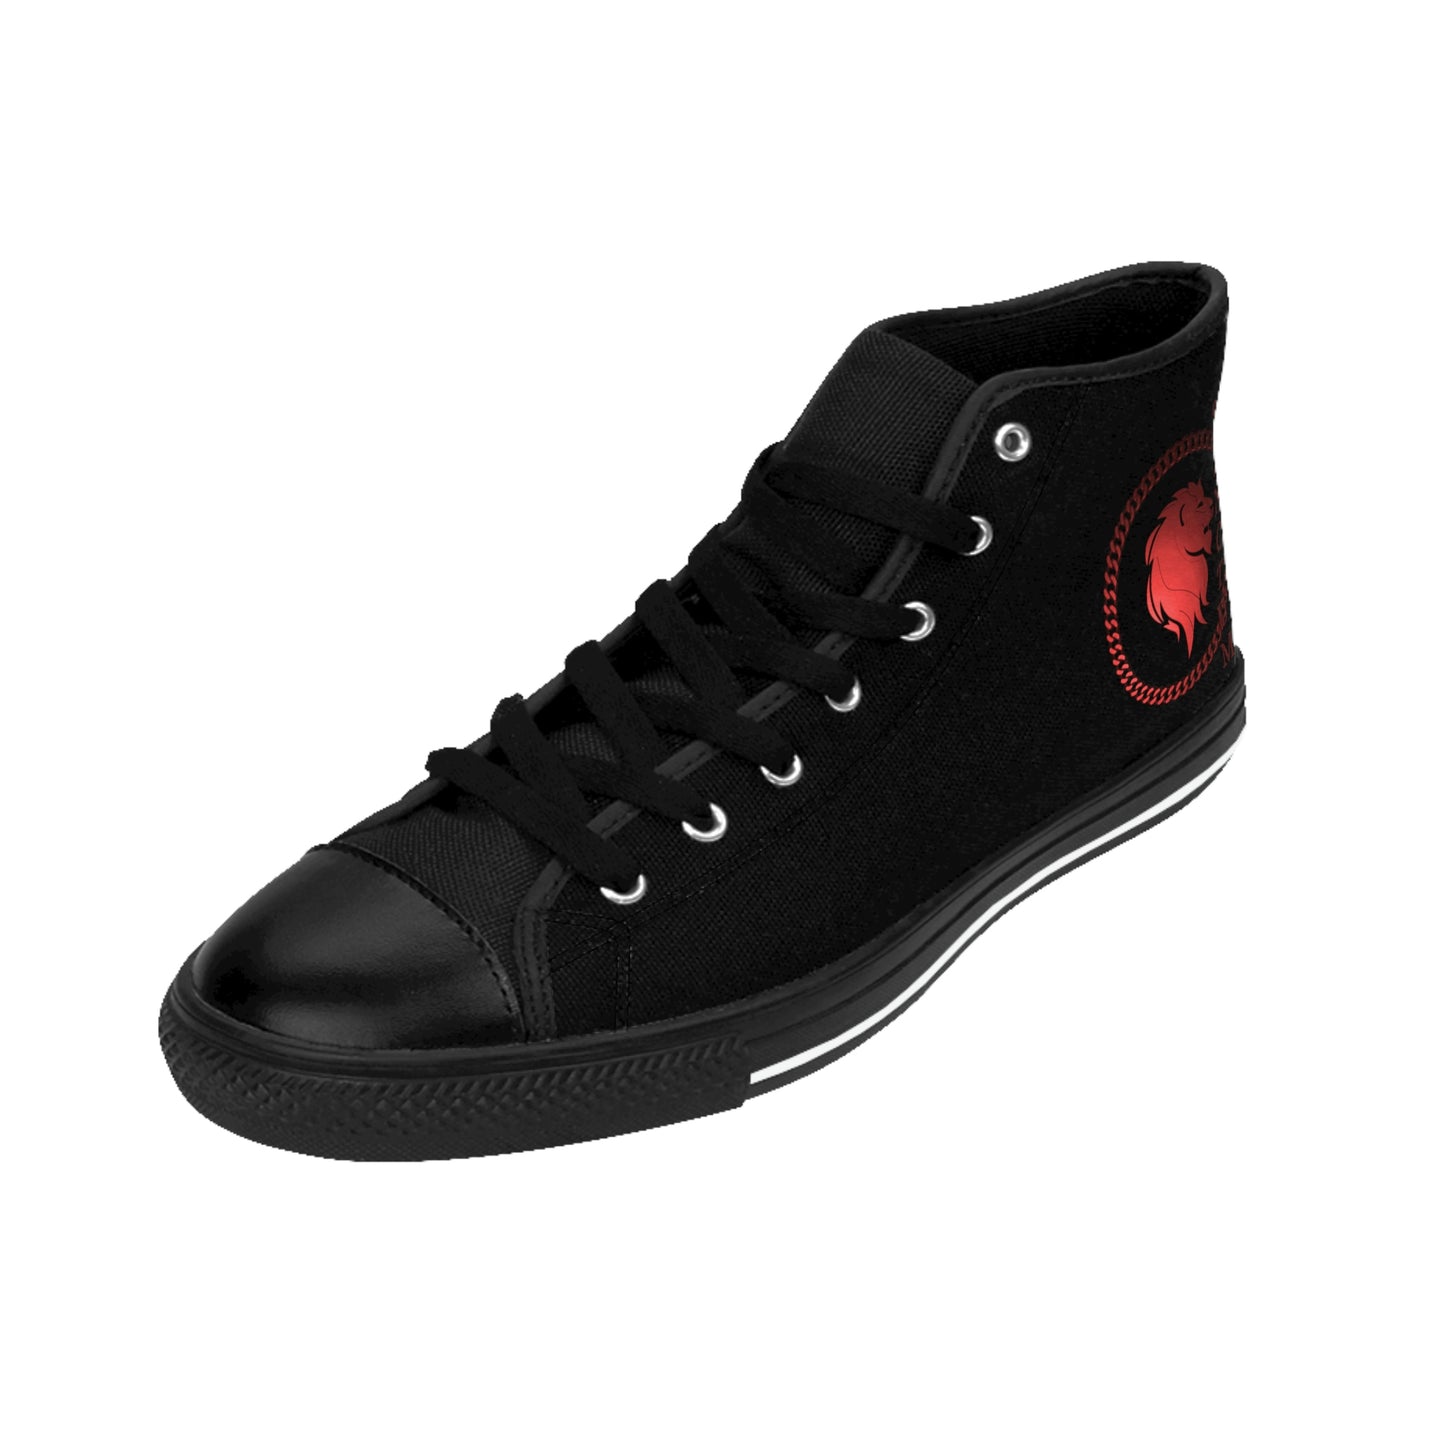 Red/Black Men's Classic Sneakers